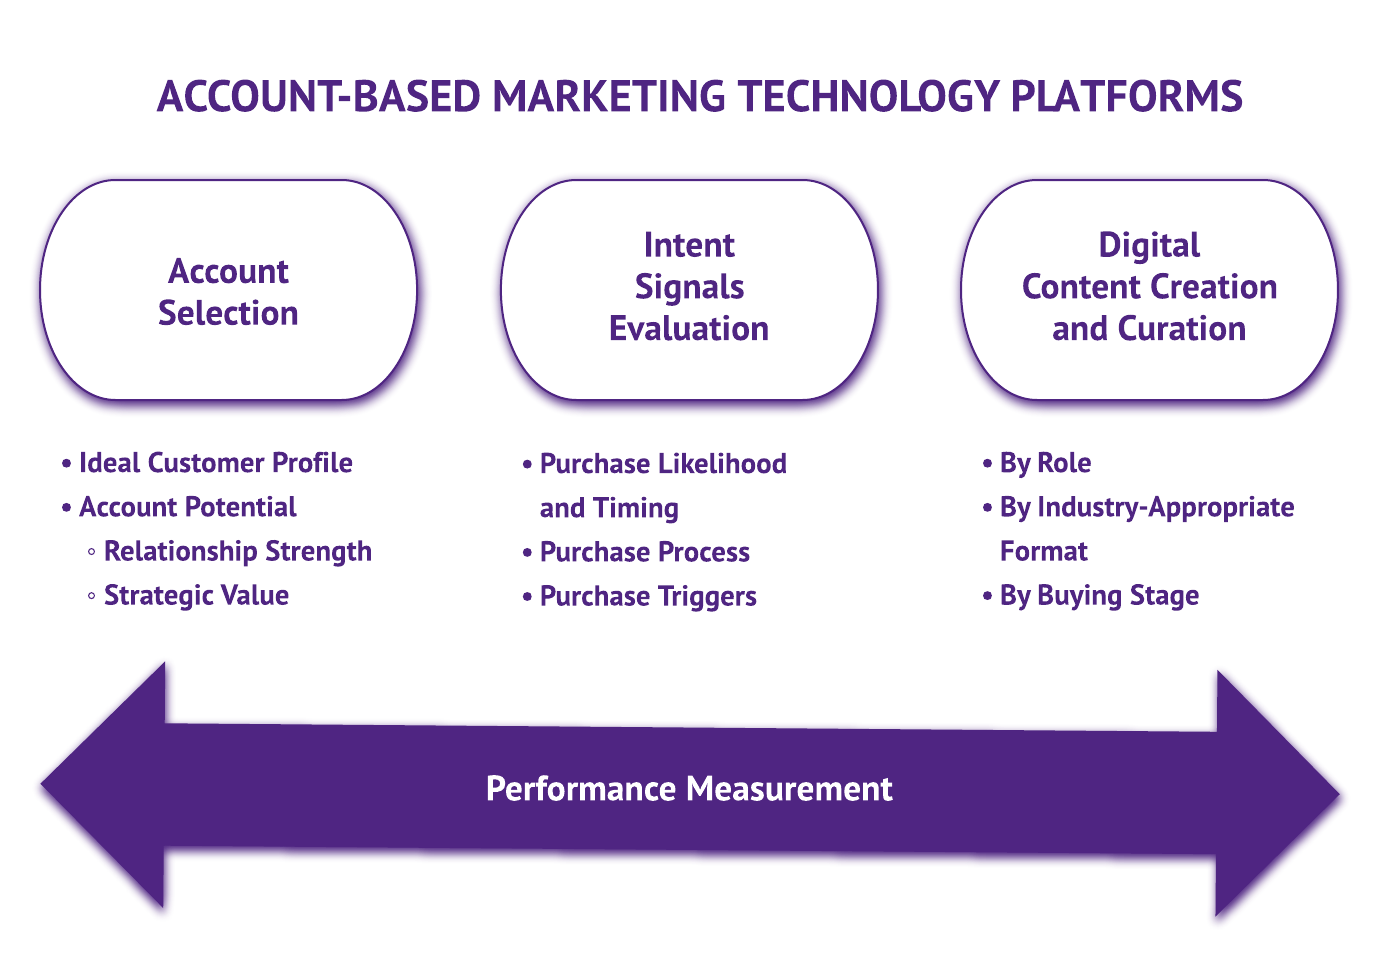 Account-Based Marketing Technology Platforms